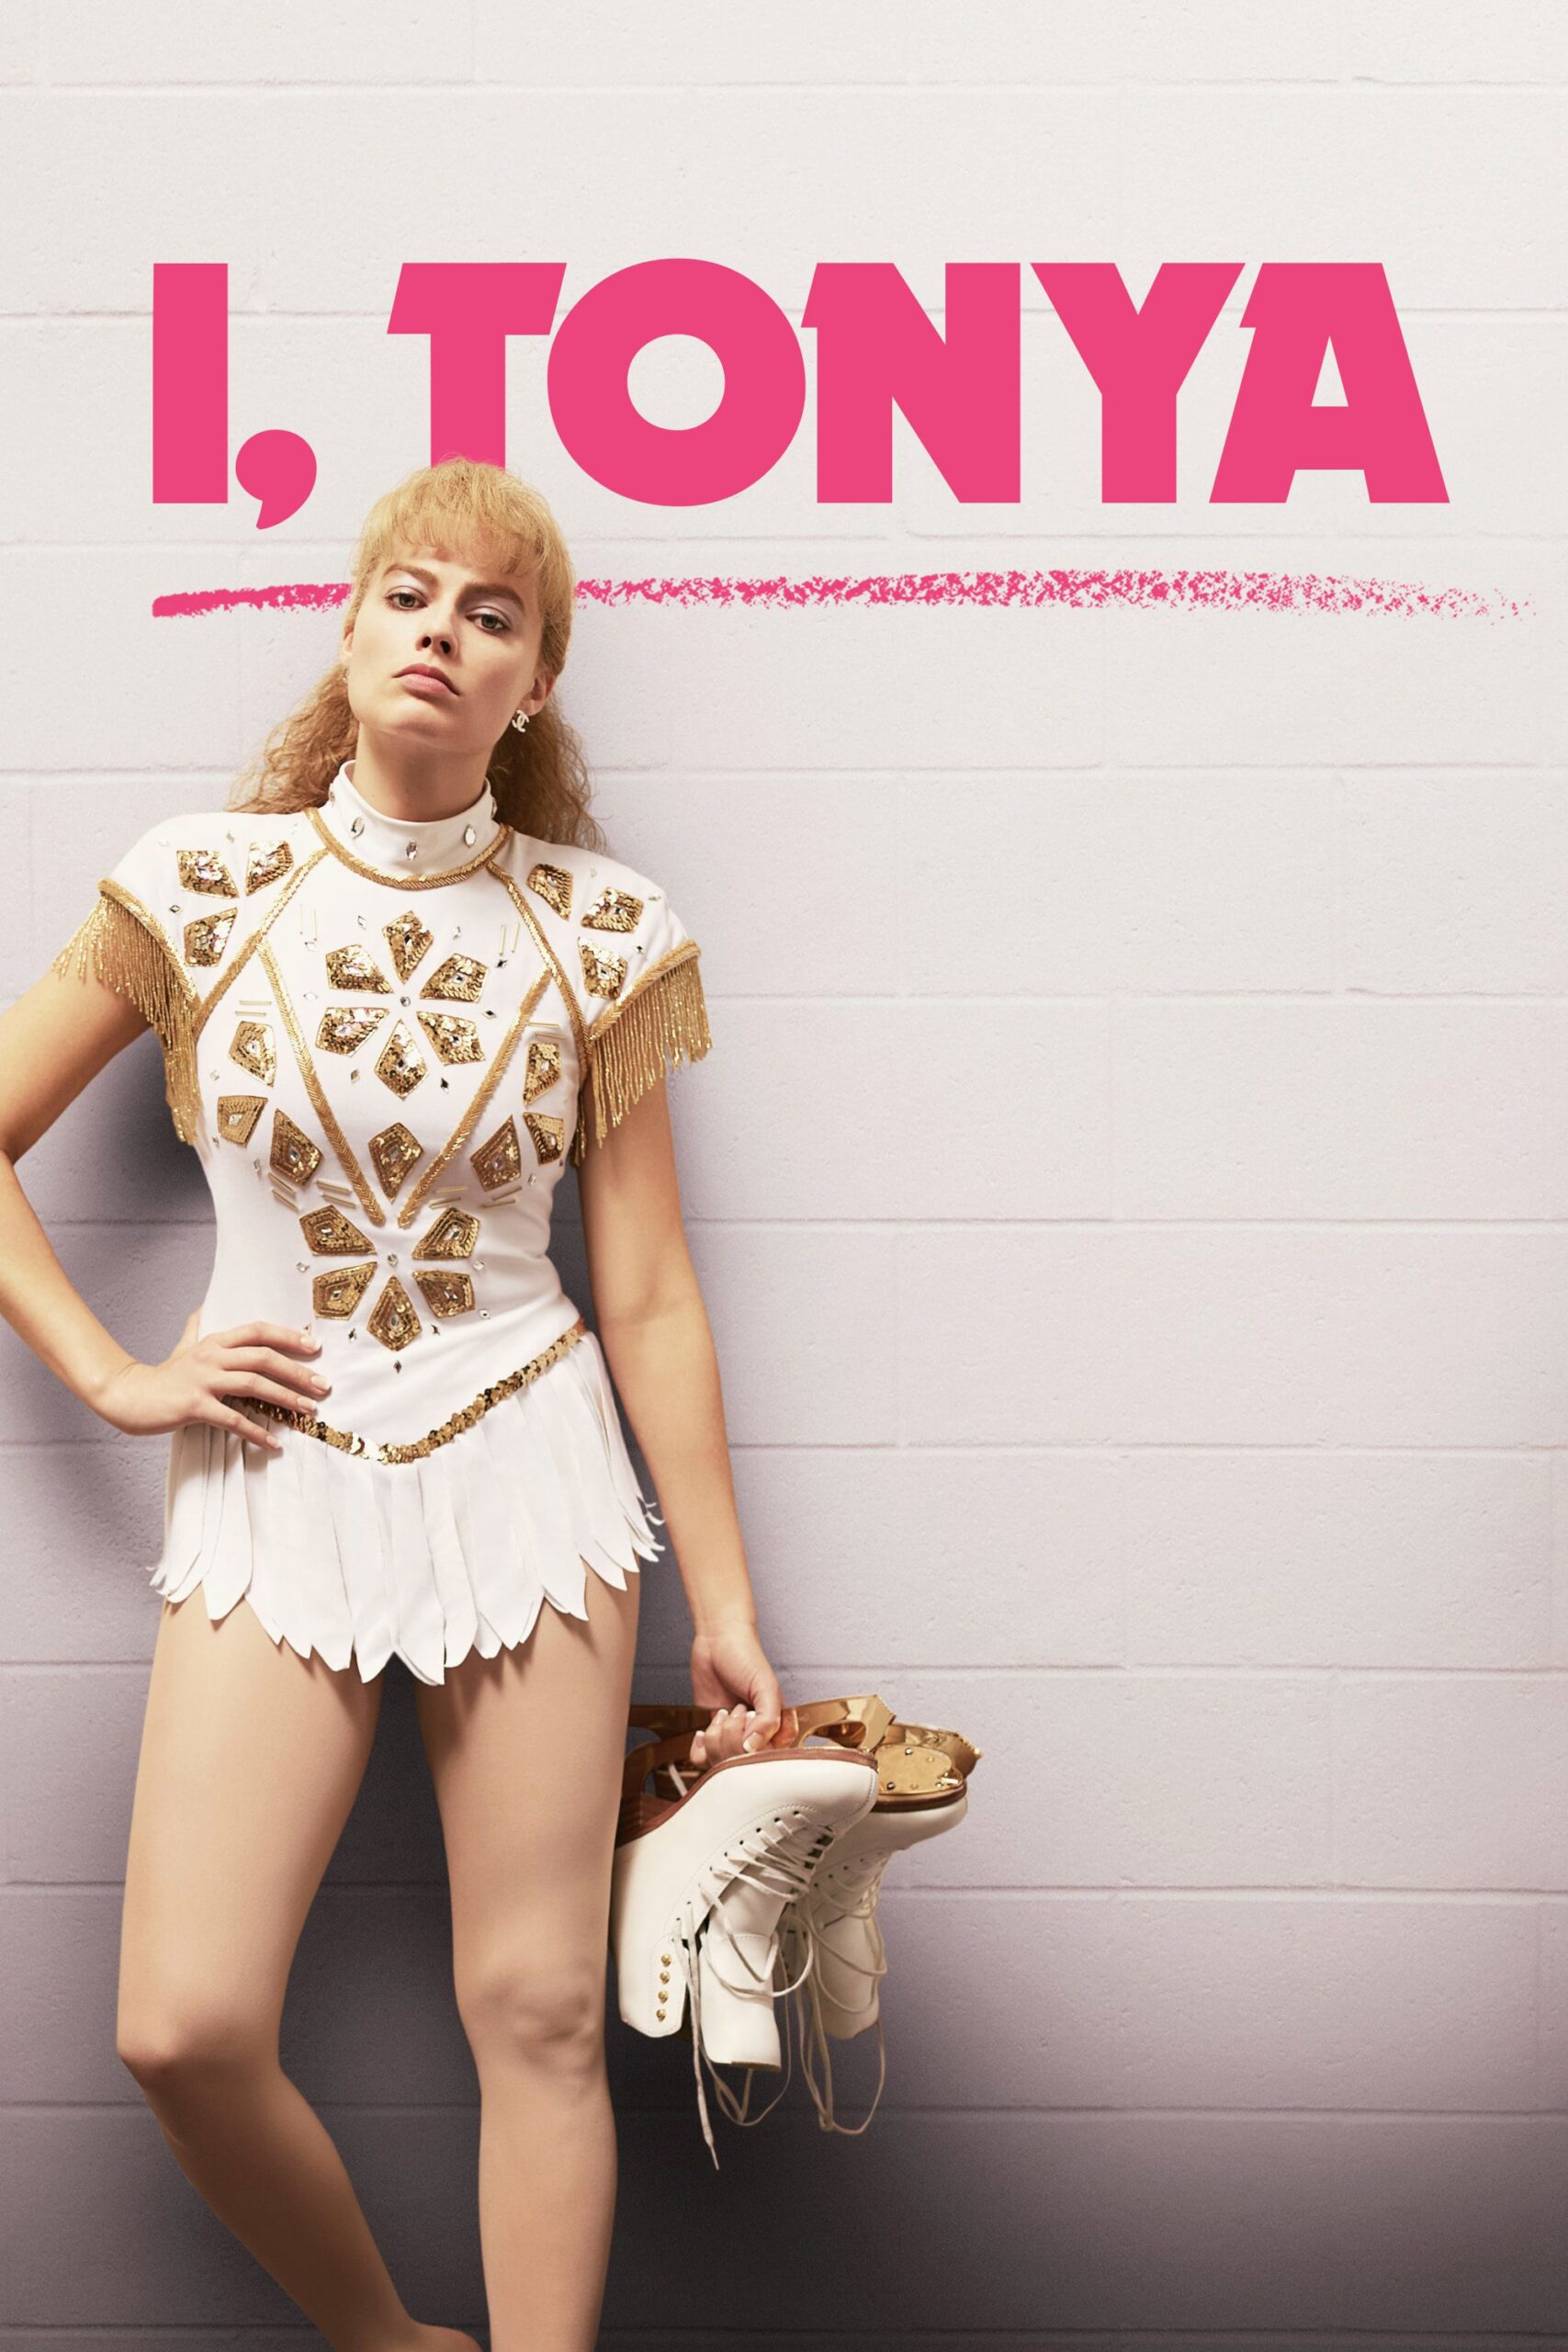 Poster for the movie "I, Tonya"